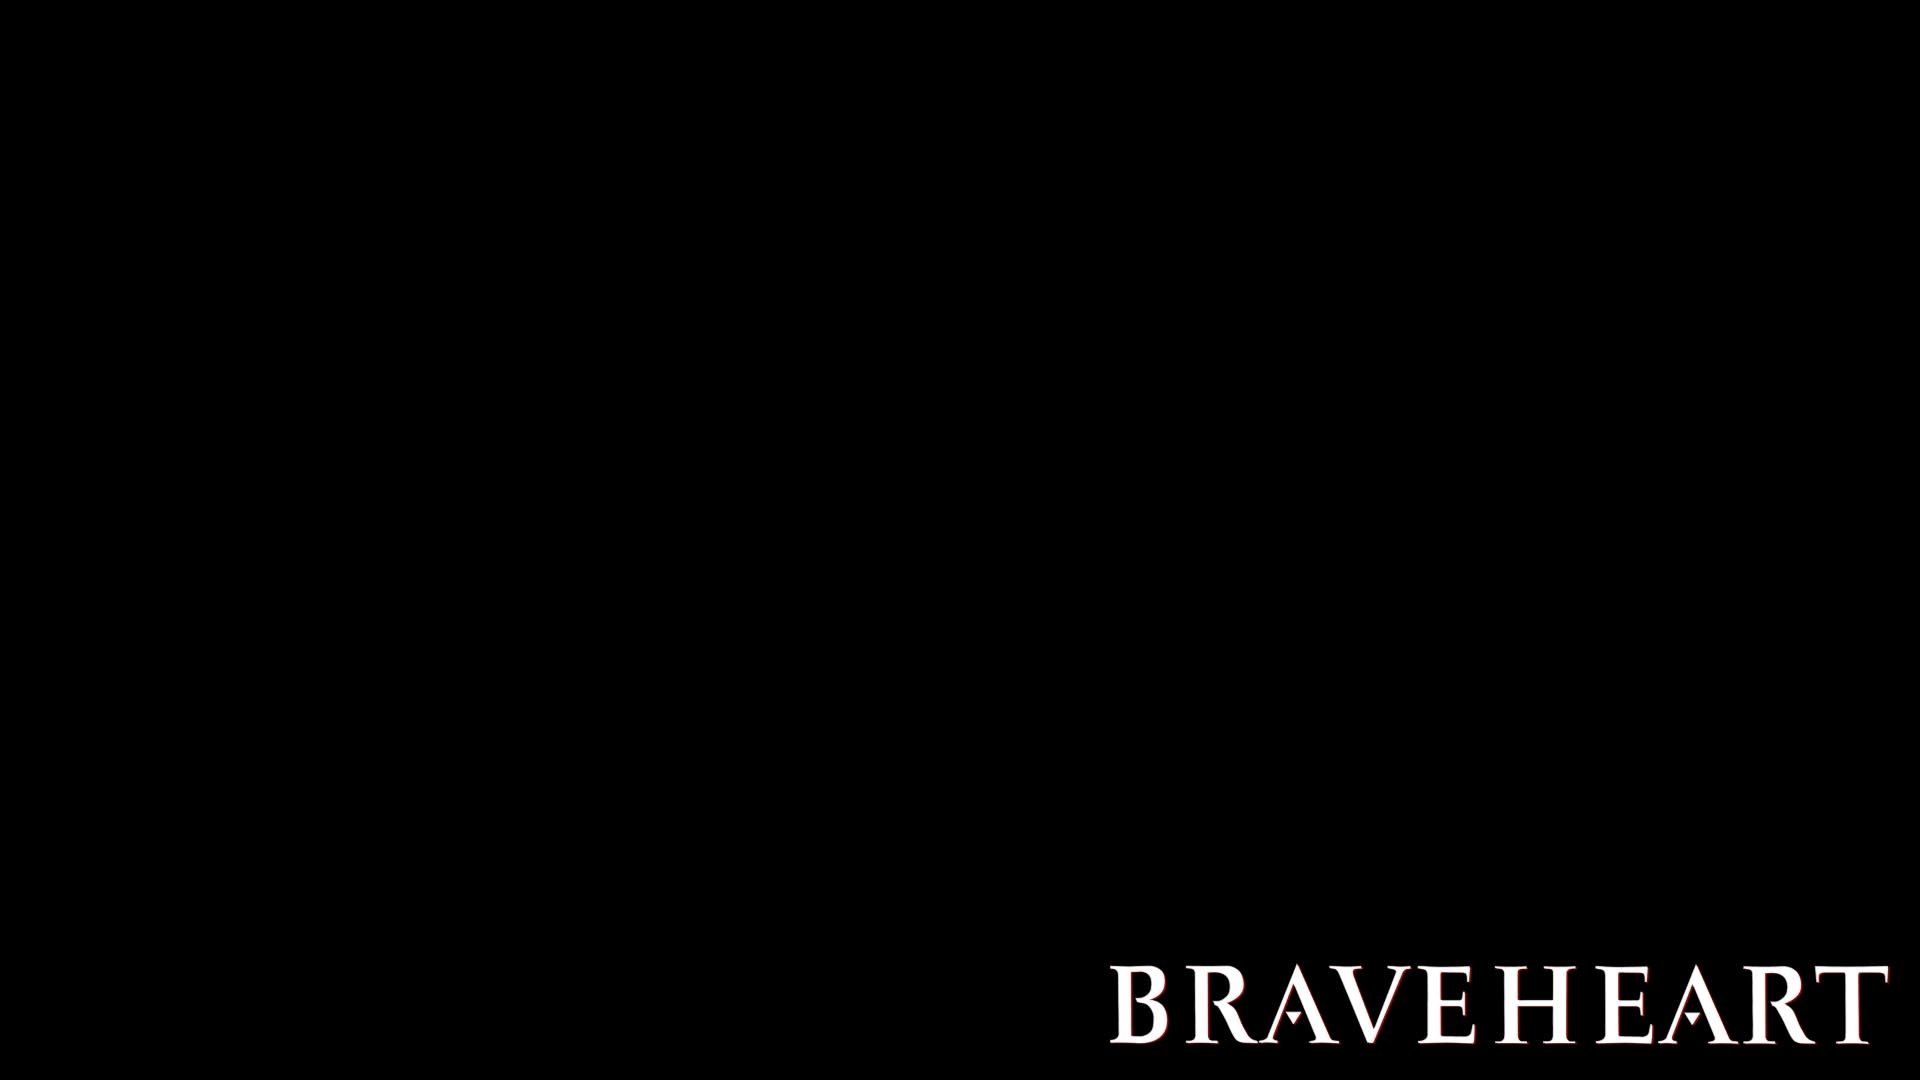 Braveheart Puter Wallpaper Desktop Background